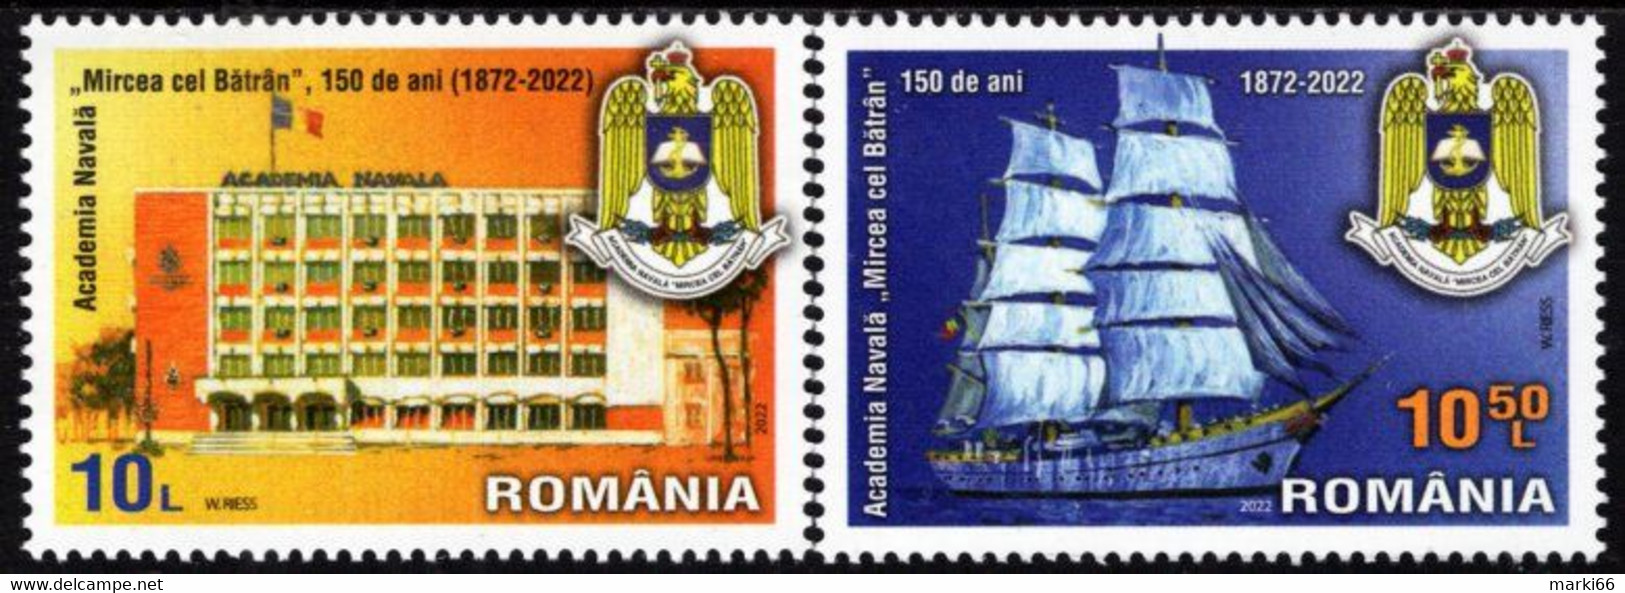 Romania - 2022 - Mircea Cel Batran - Naval Academy, 150 Years - Mint Stamp Set - Unused Stamps